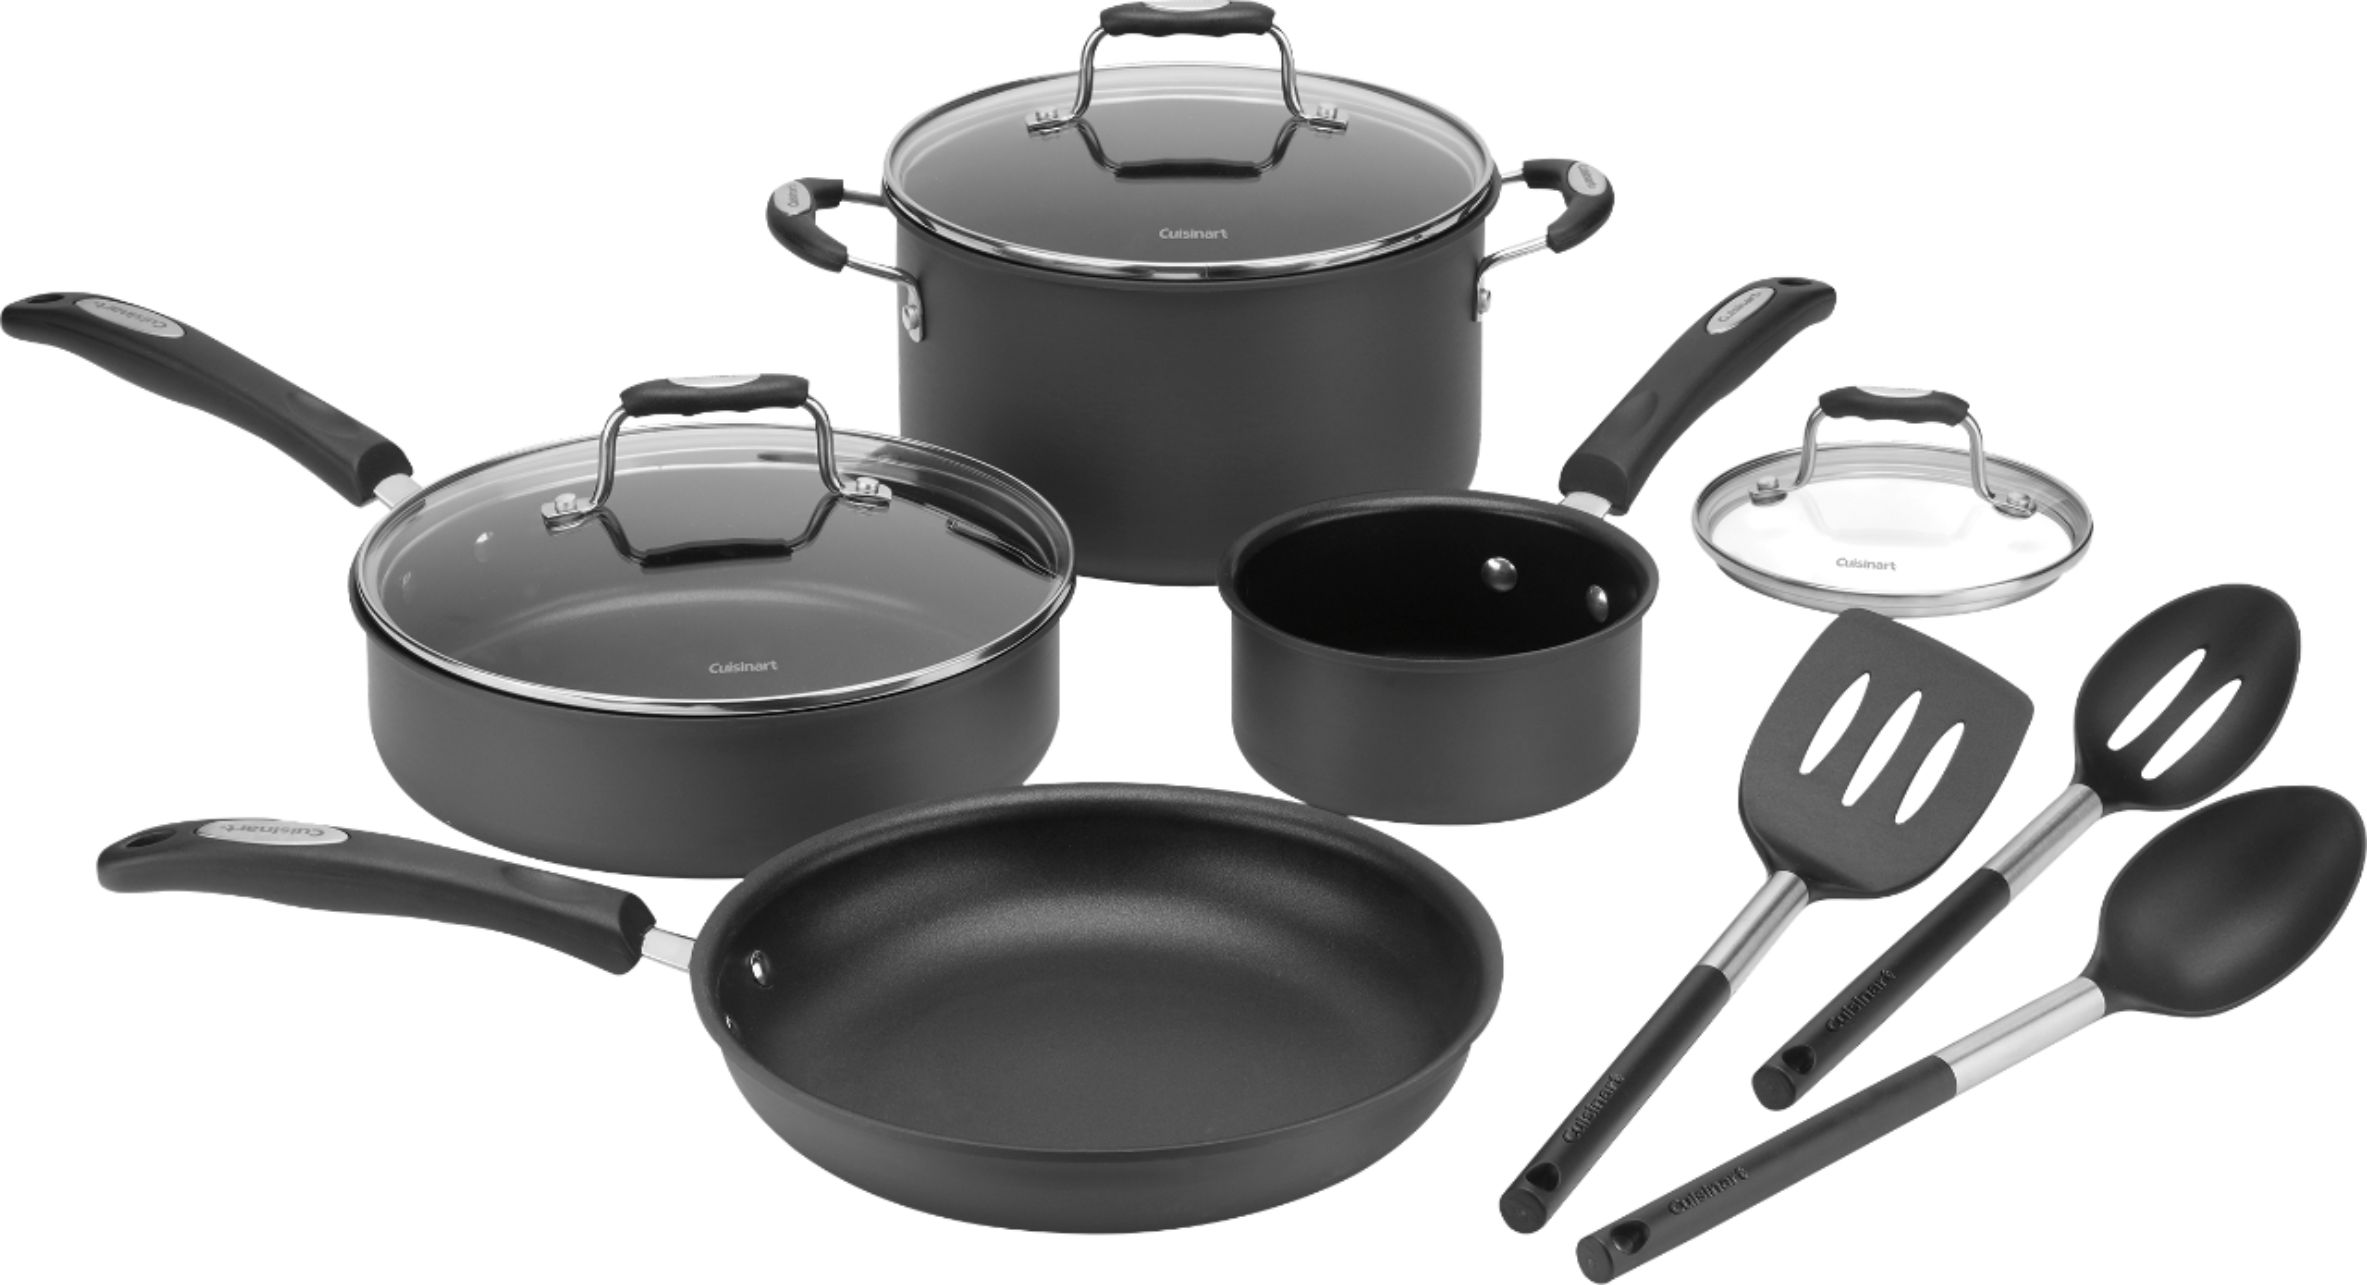 Cuisinart 10 Pieces Stainless Steel Cookware Set